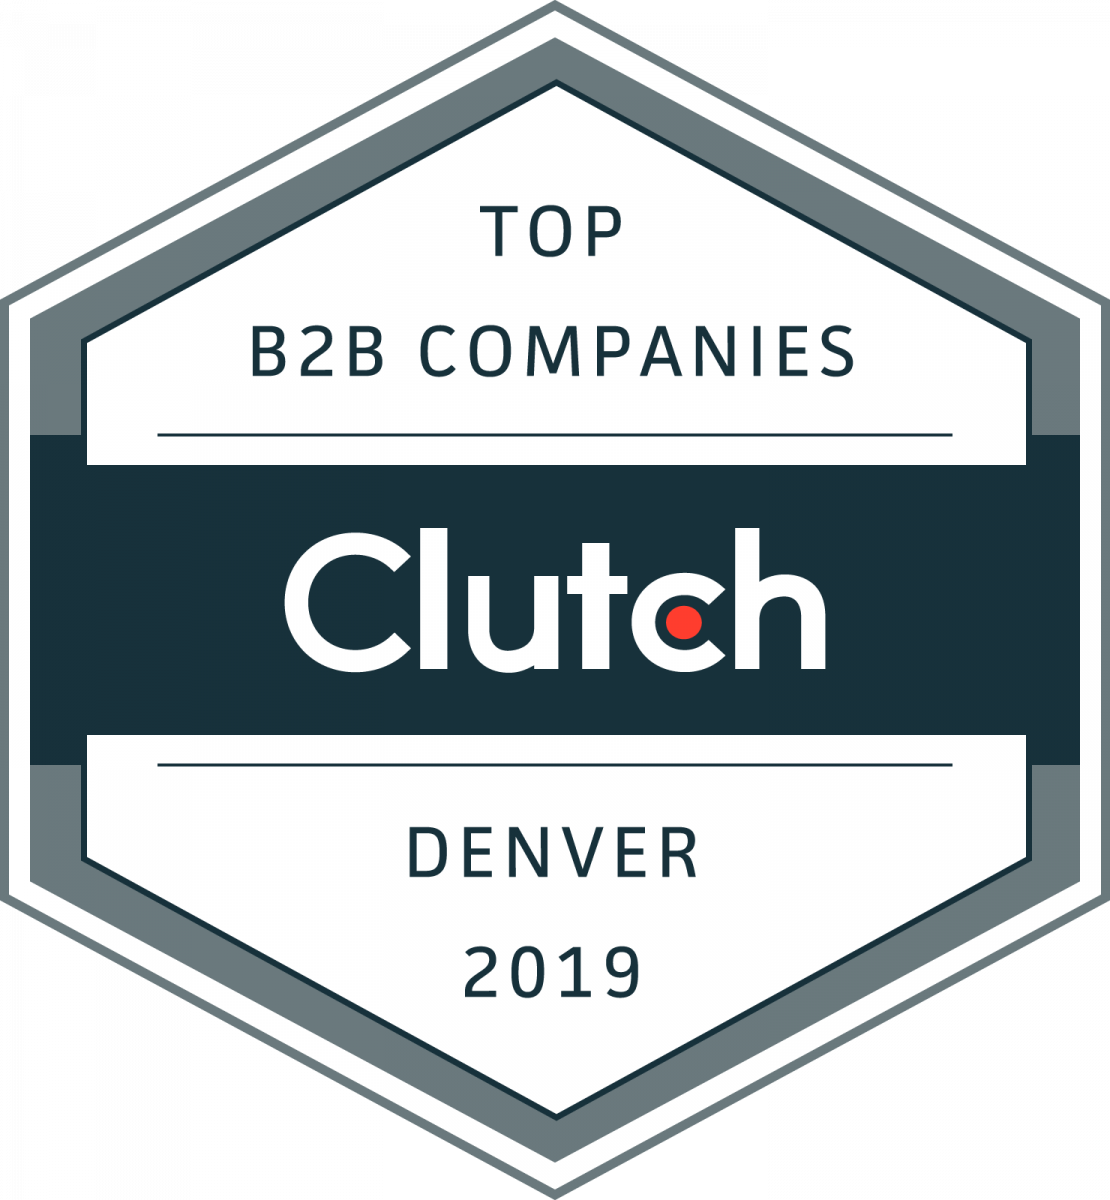 TOP Development Companies - Denver 2019